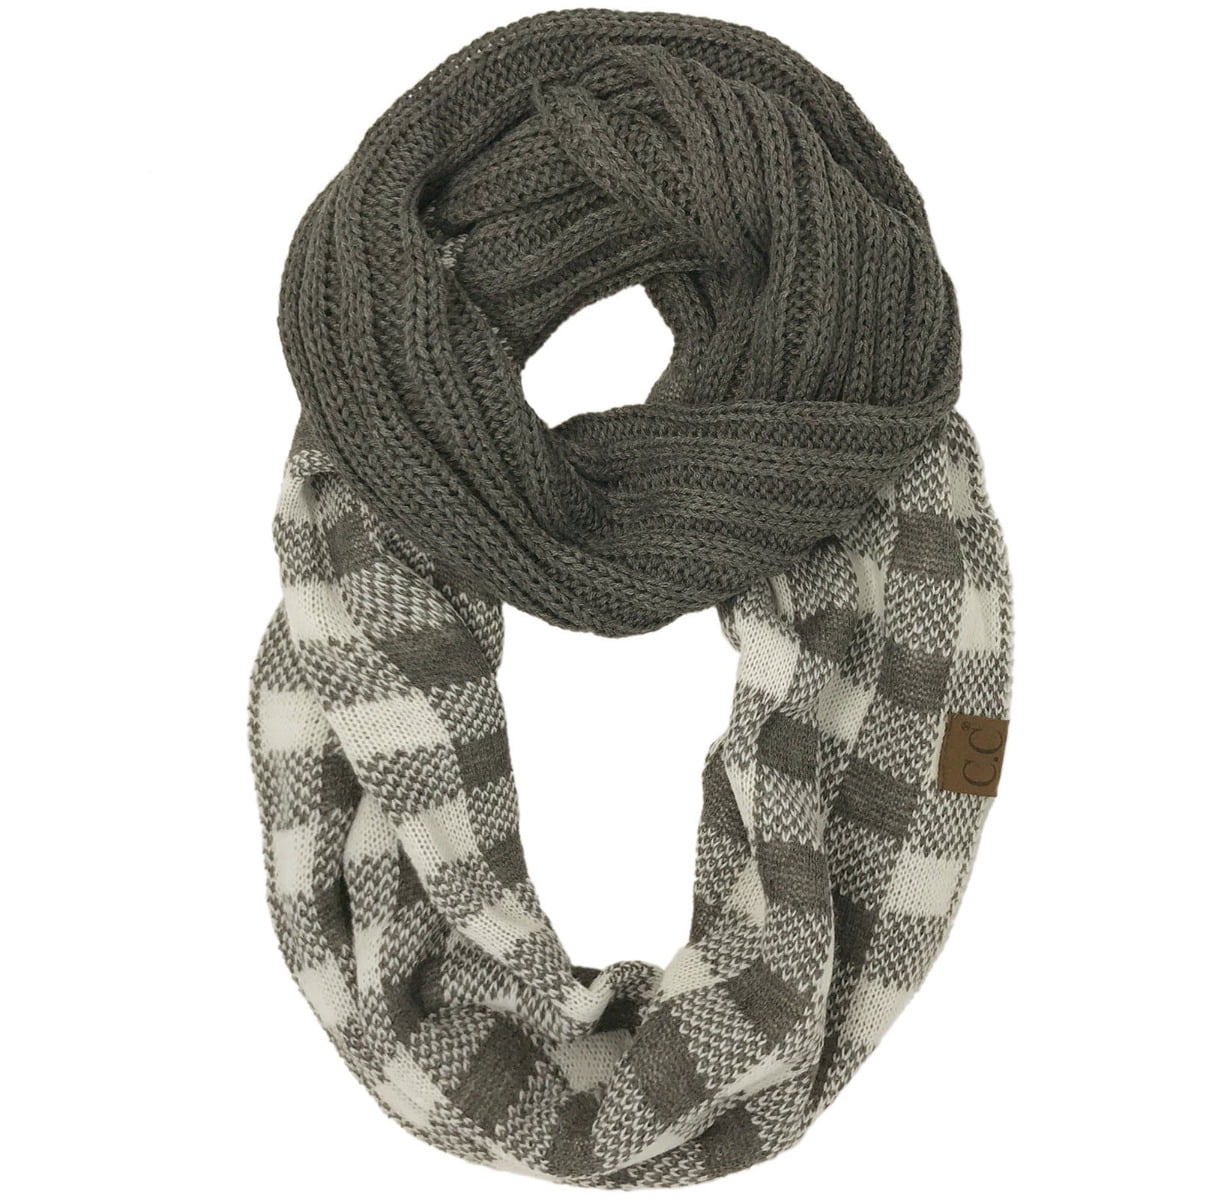 Solid Navy BIue Infinity Scarf Loop Cowl Soft Lightweight Crochet Knit Winter